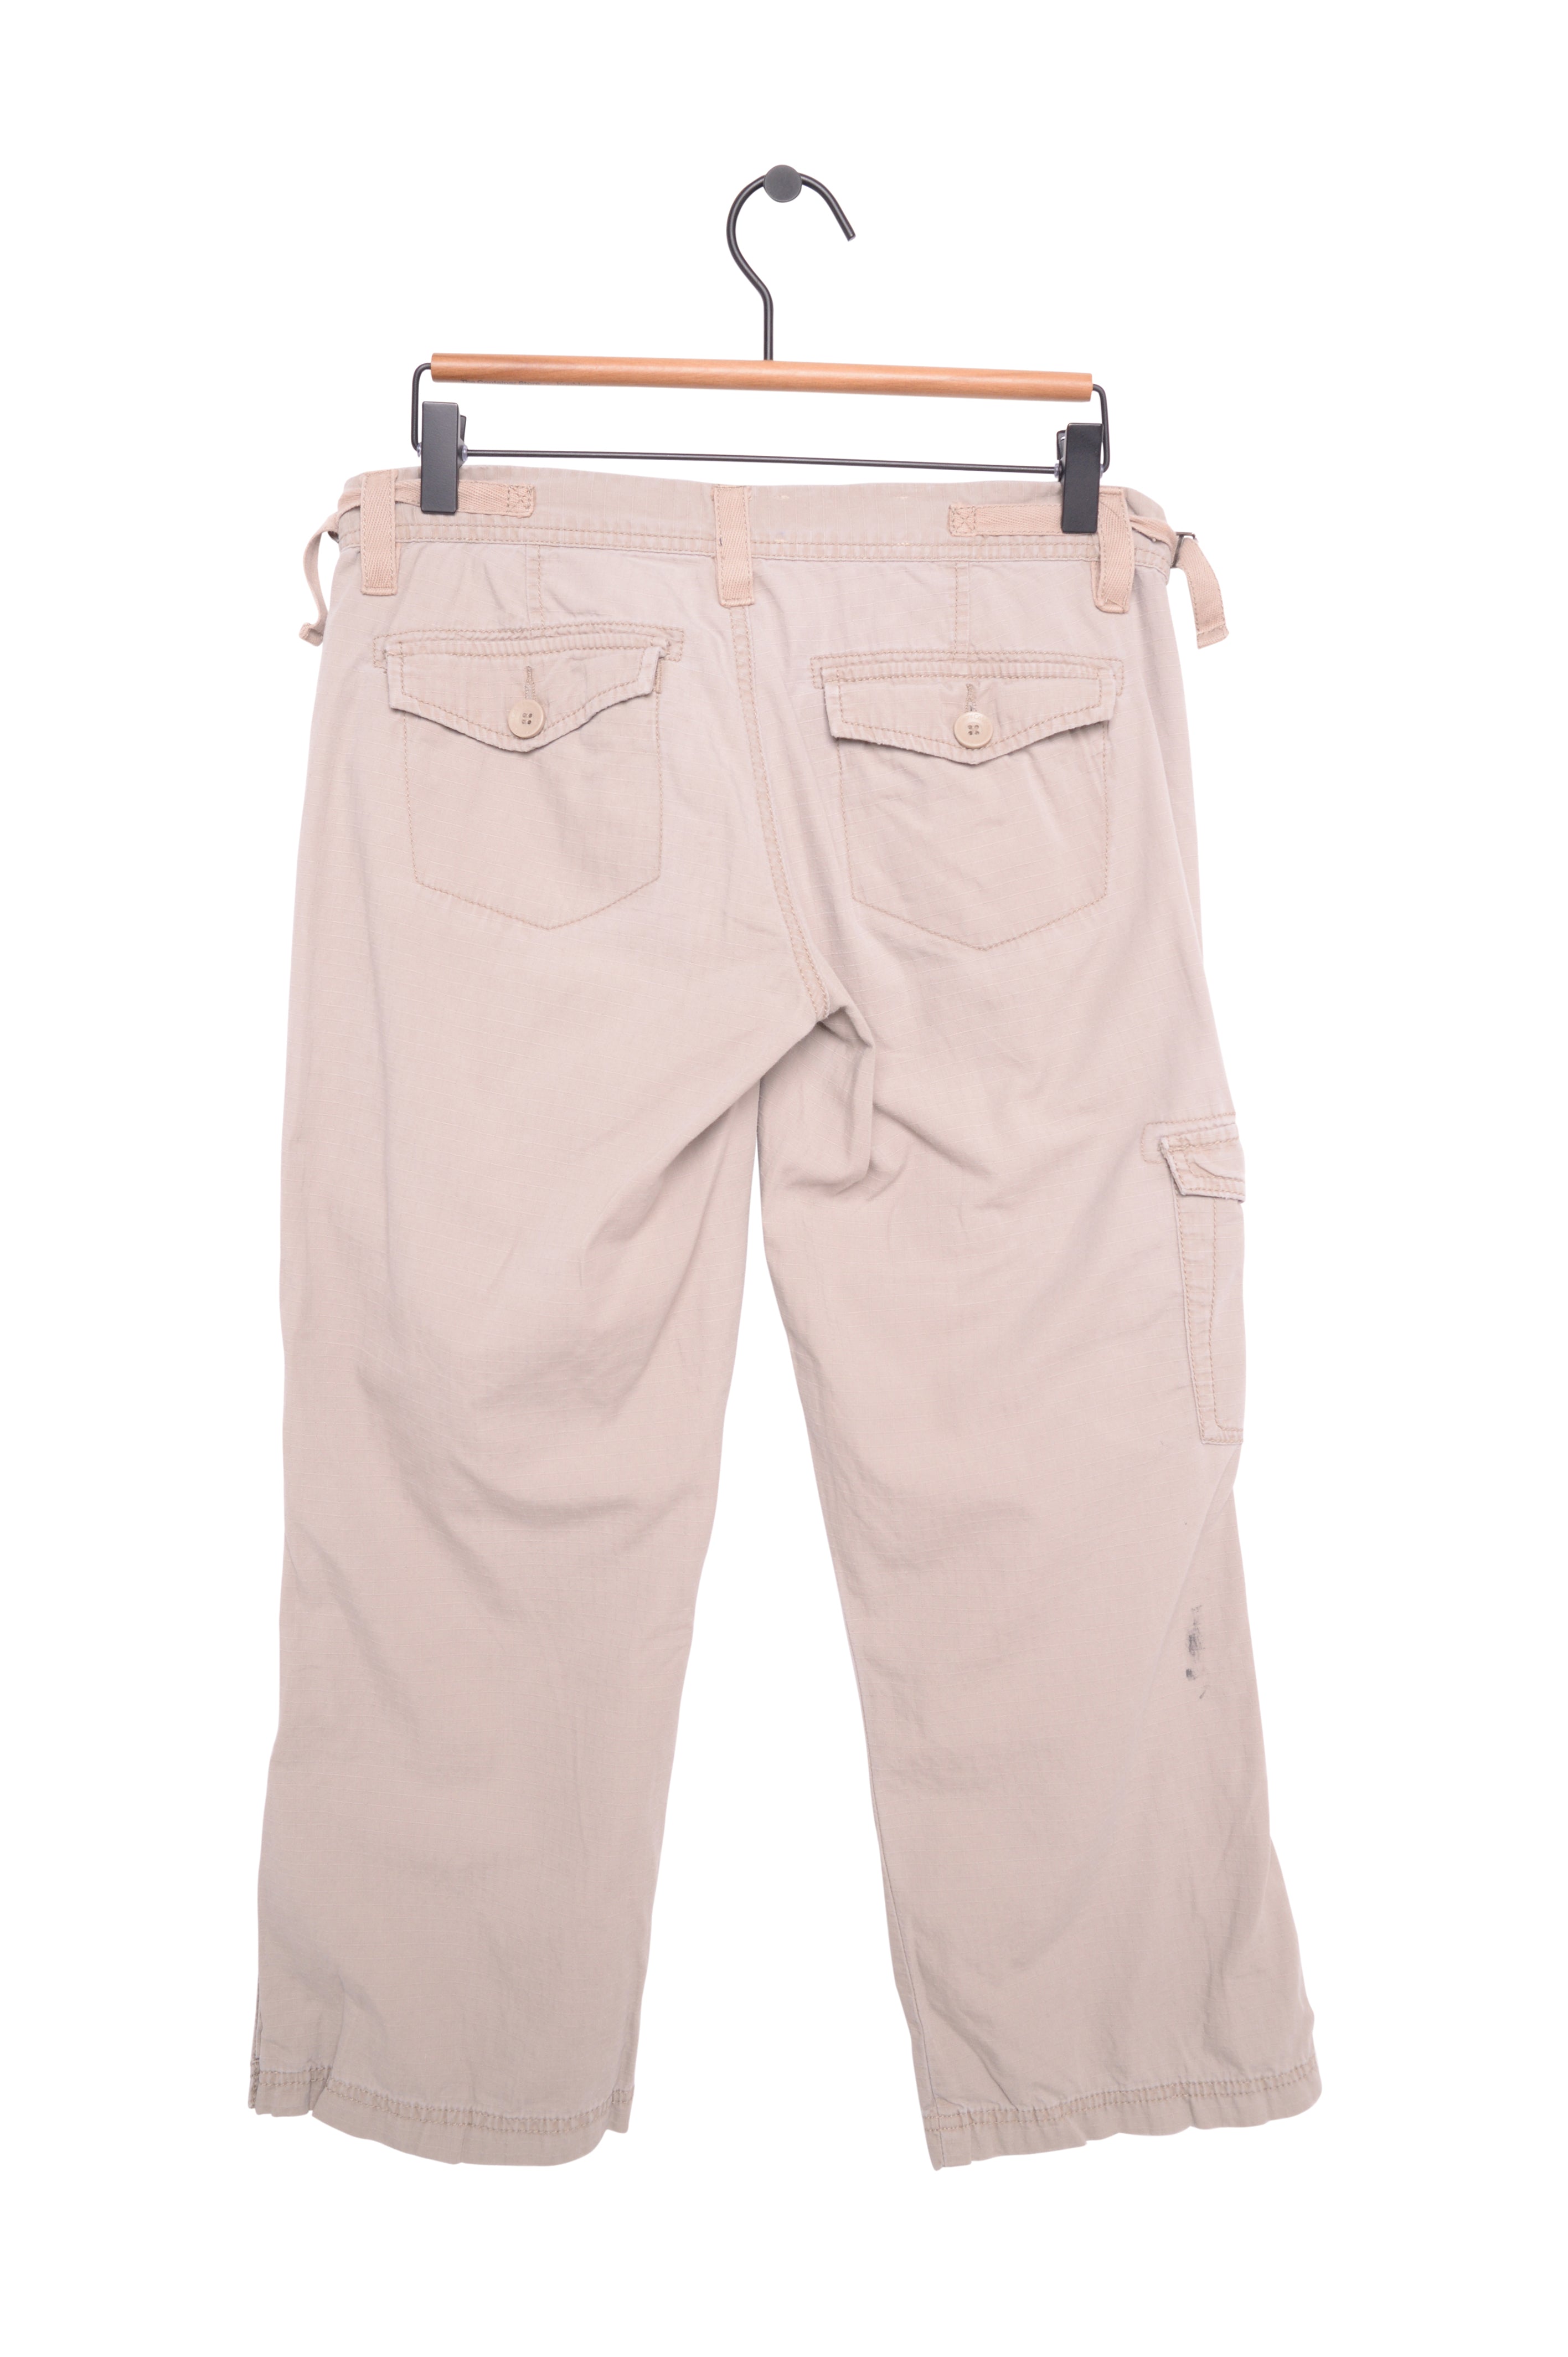 Pants Cargo & Utility By Calvin Klein Size: 6